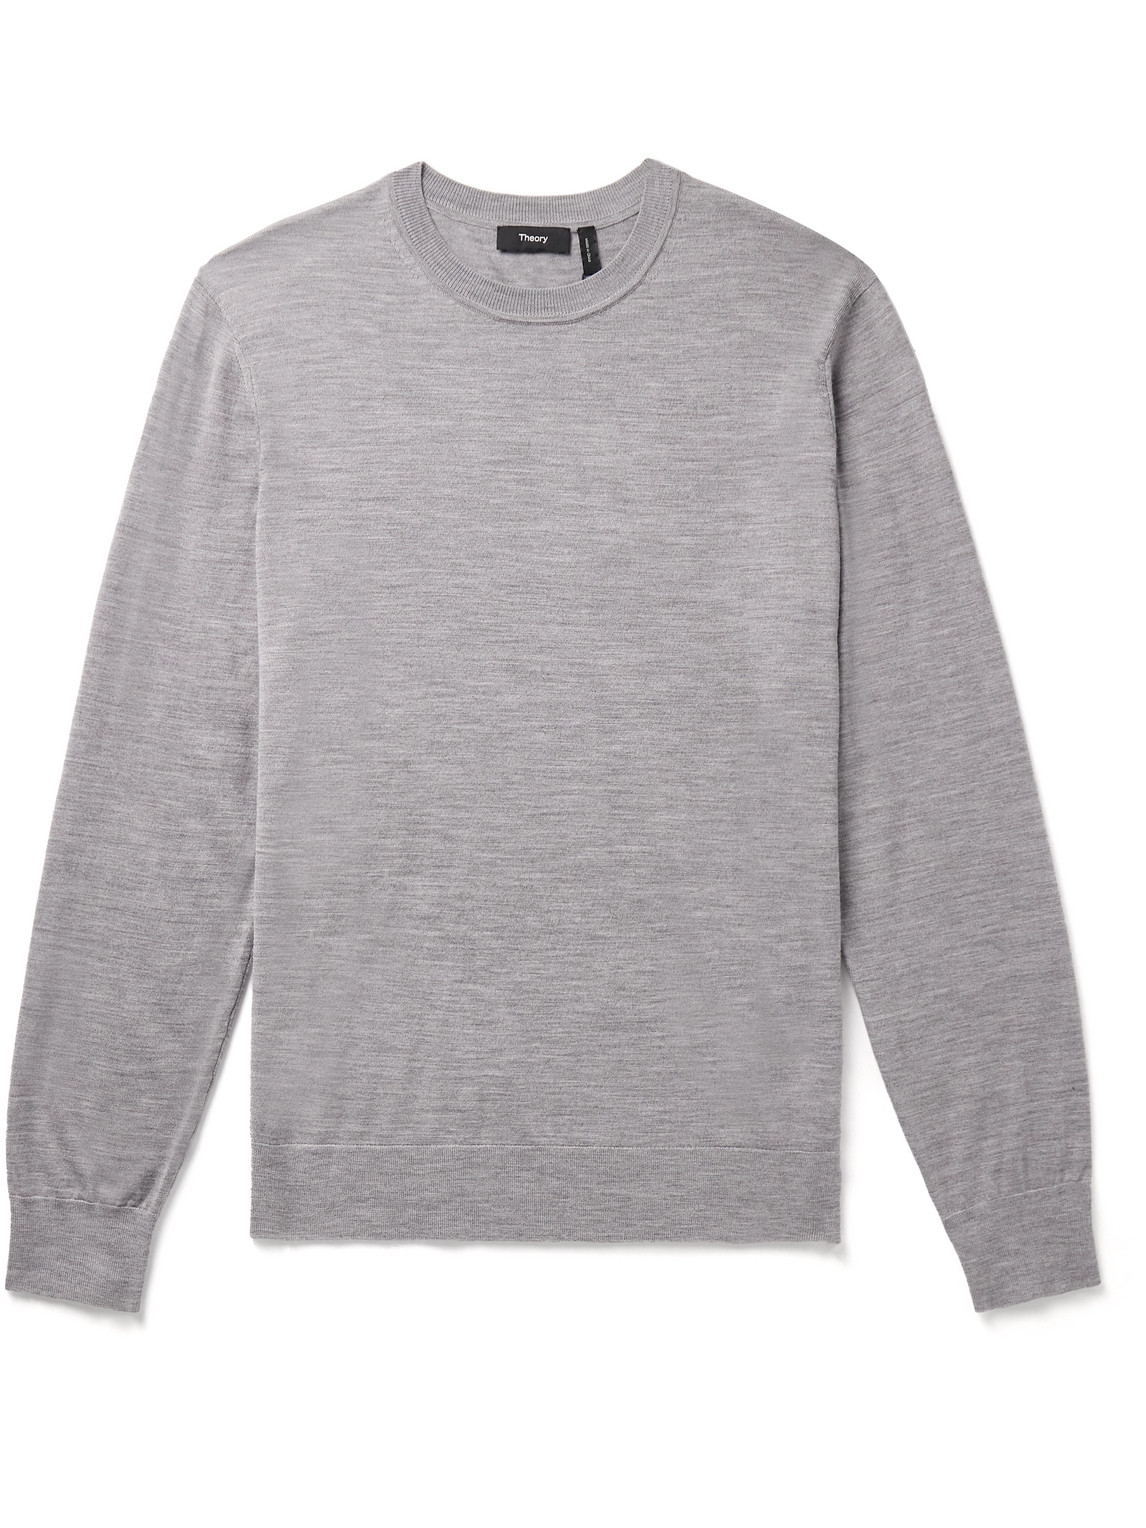 Theory - Slim-Fit Wool Sweater - Men - Gray - XXL von Theory